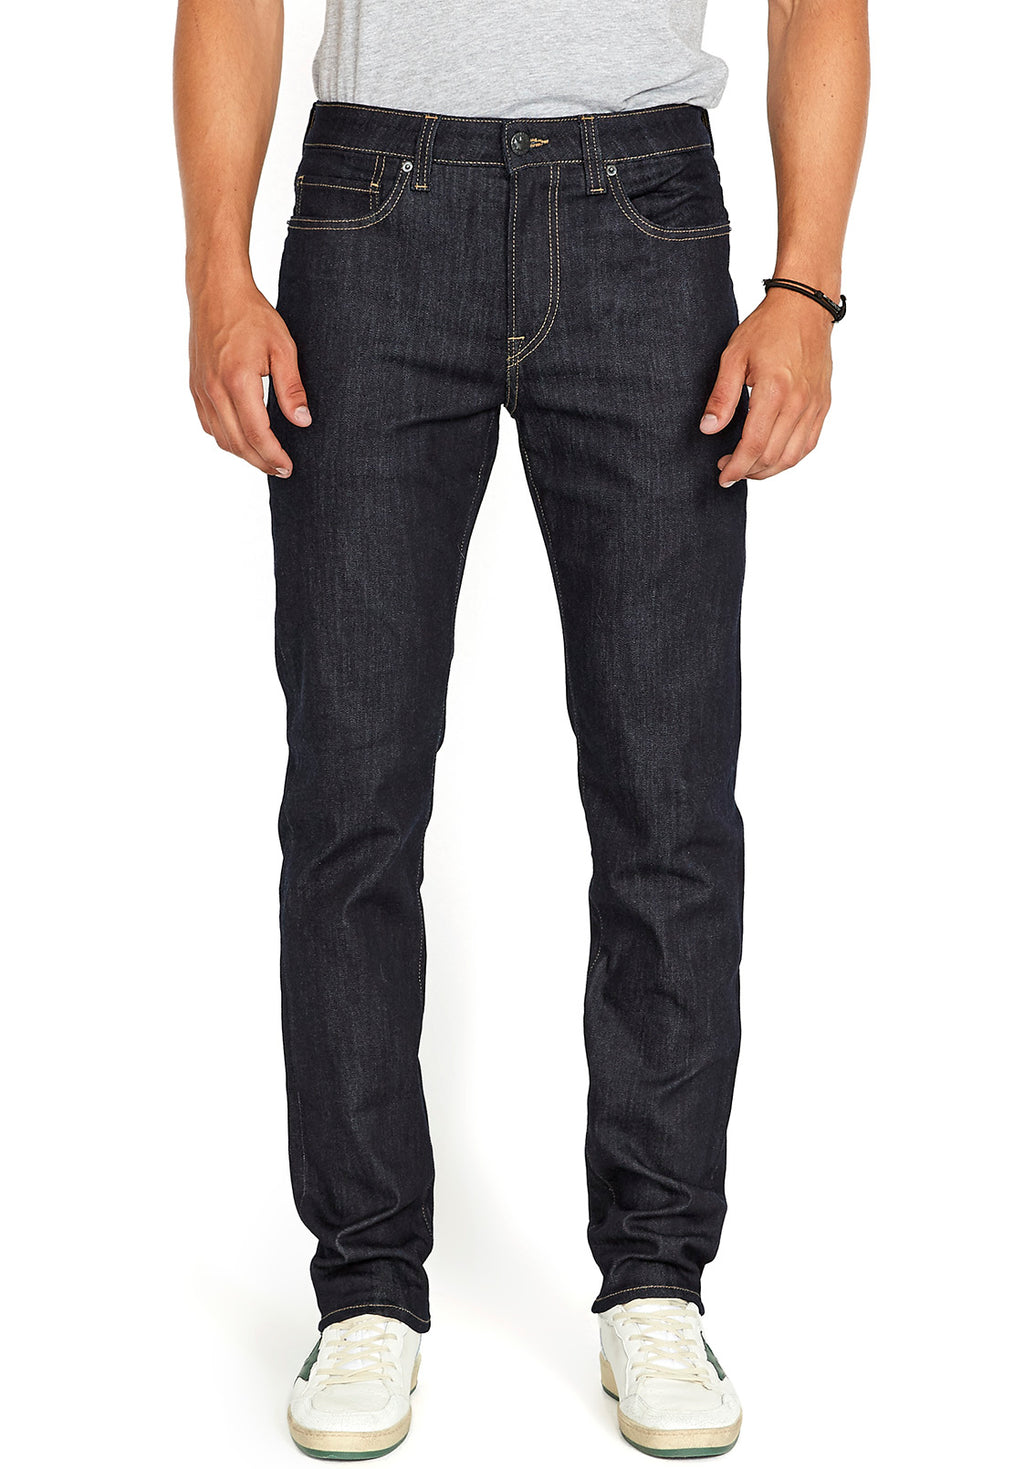 New Levi's 511 Slim Shorts Distressed Denim Blue Jean Shorts Men Size 30 x  10.25